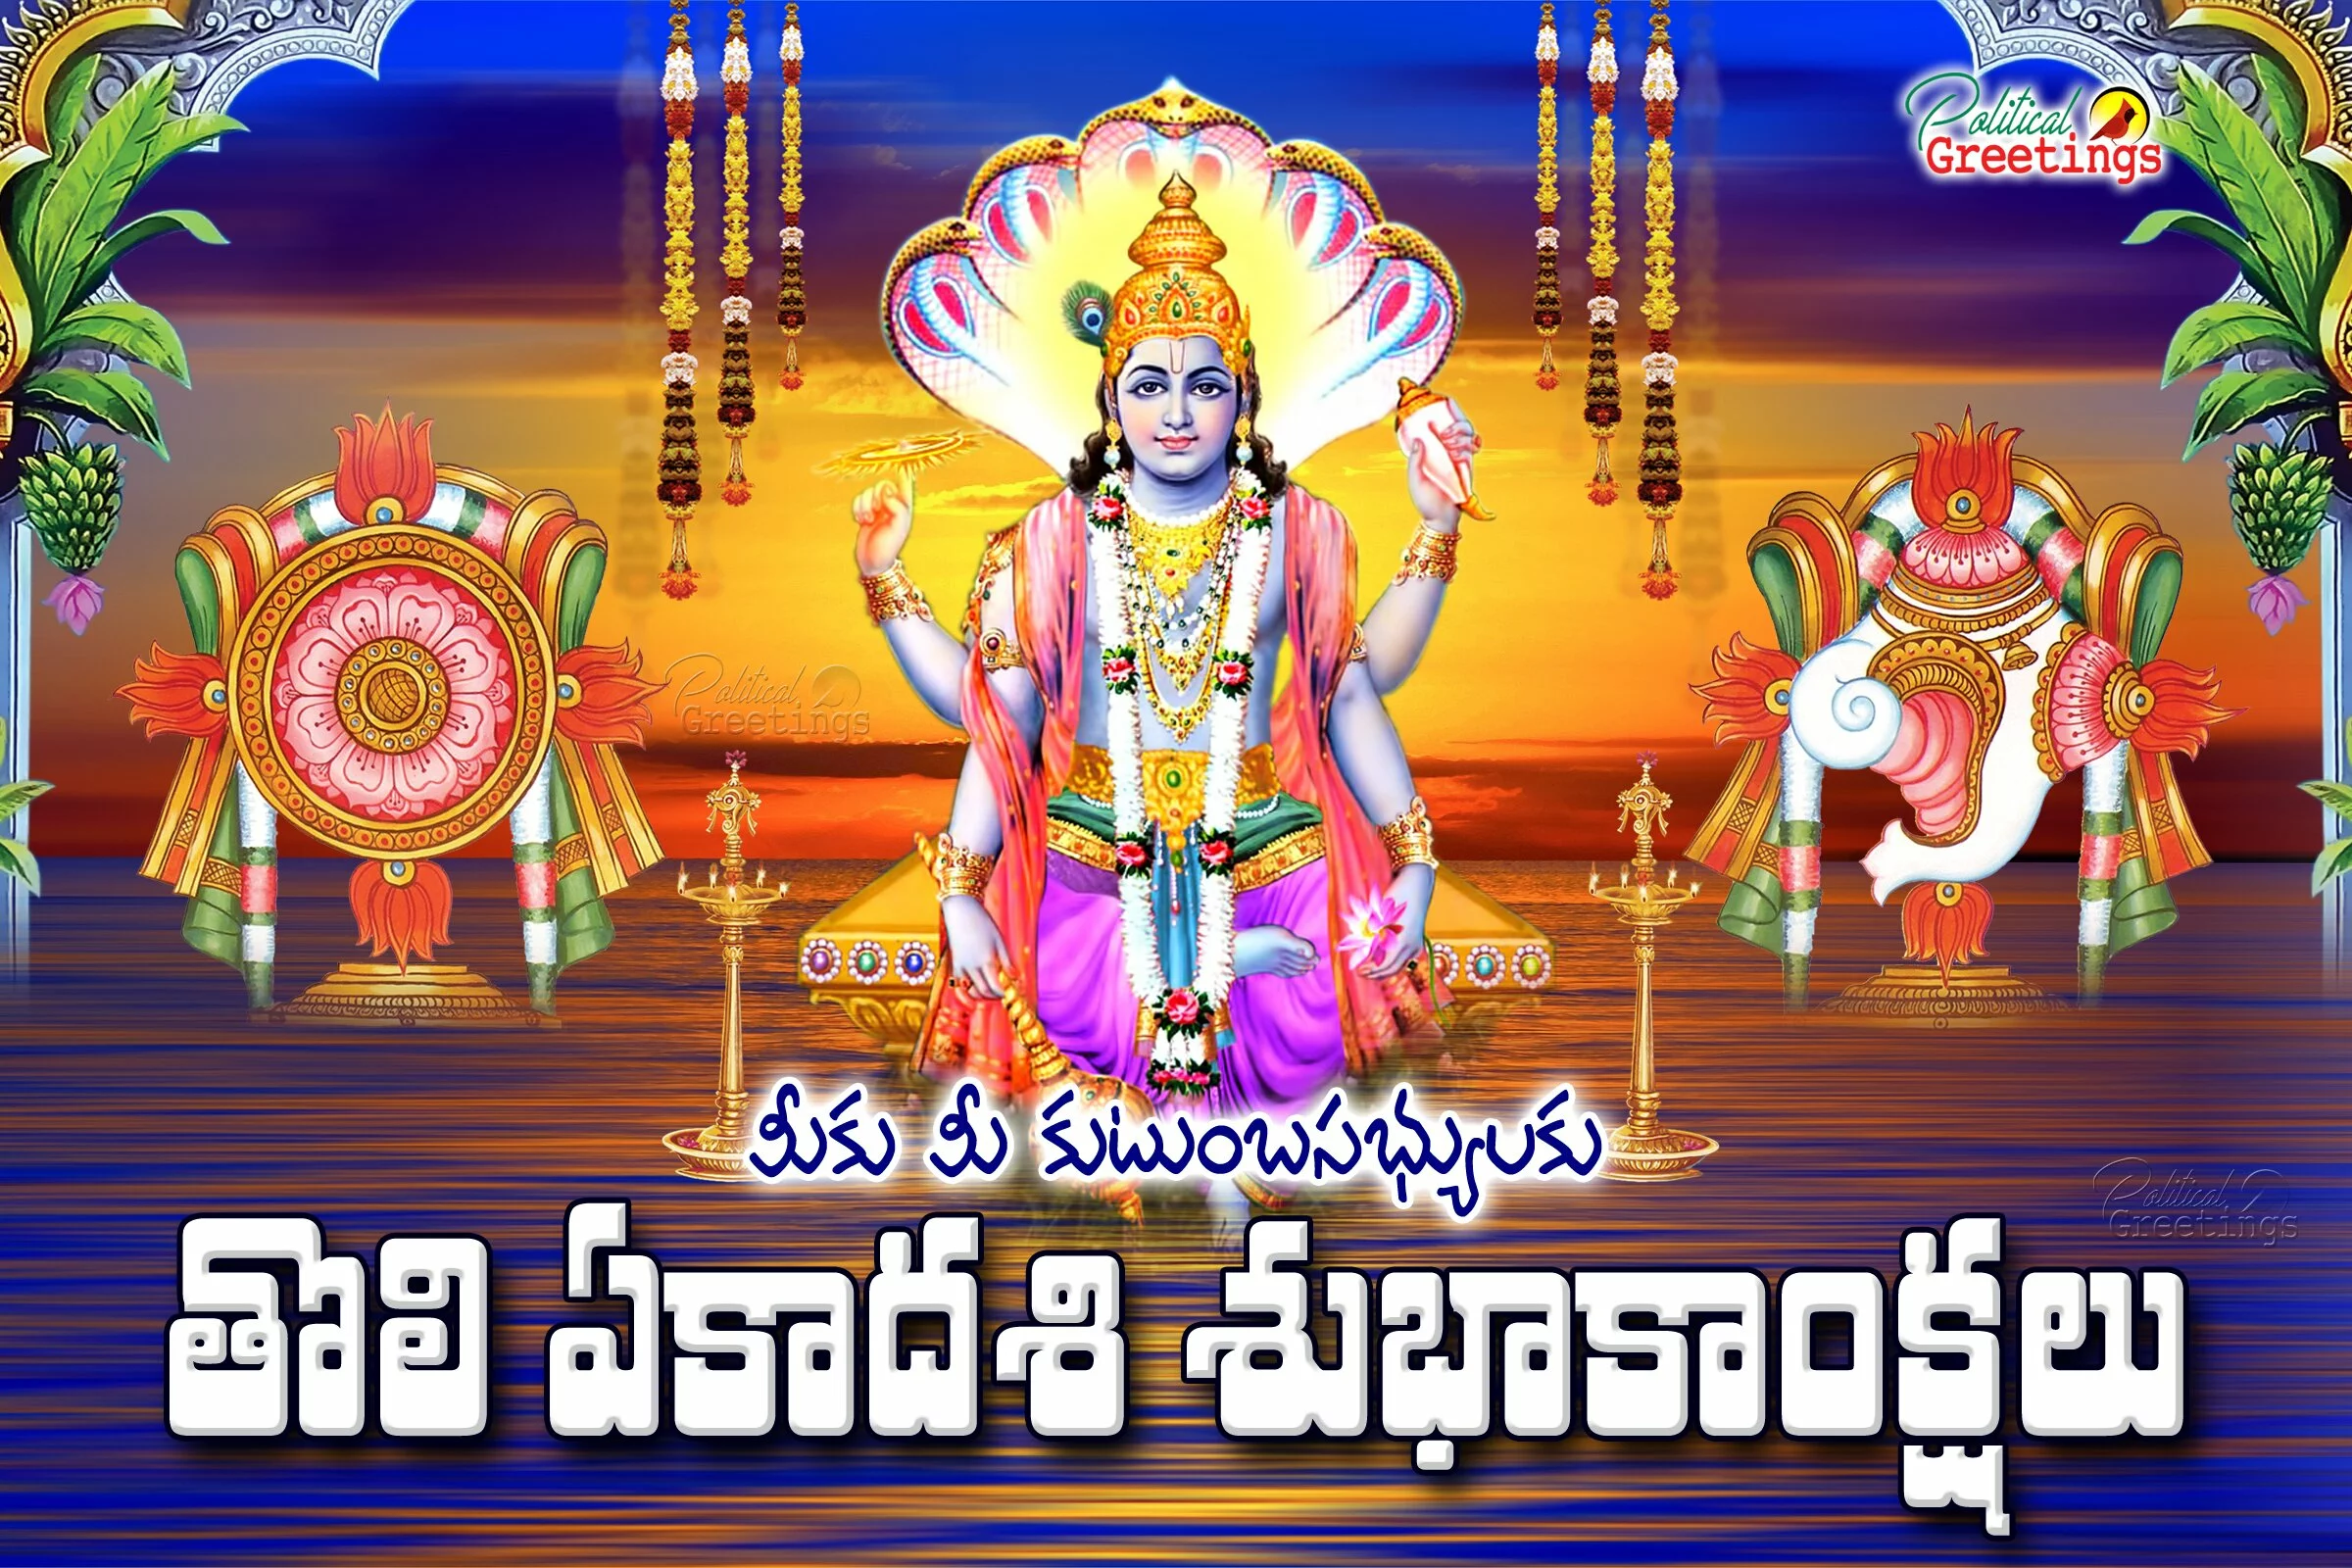 Toli Ekadasi Wishes and Greetings in Telugu with Lakshminarayana hd wallpapers